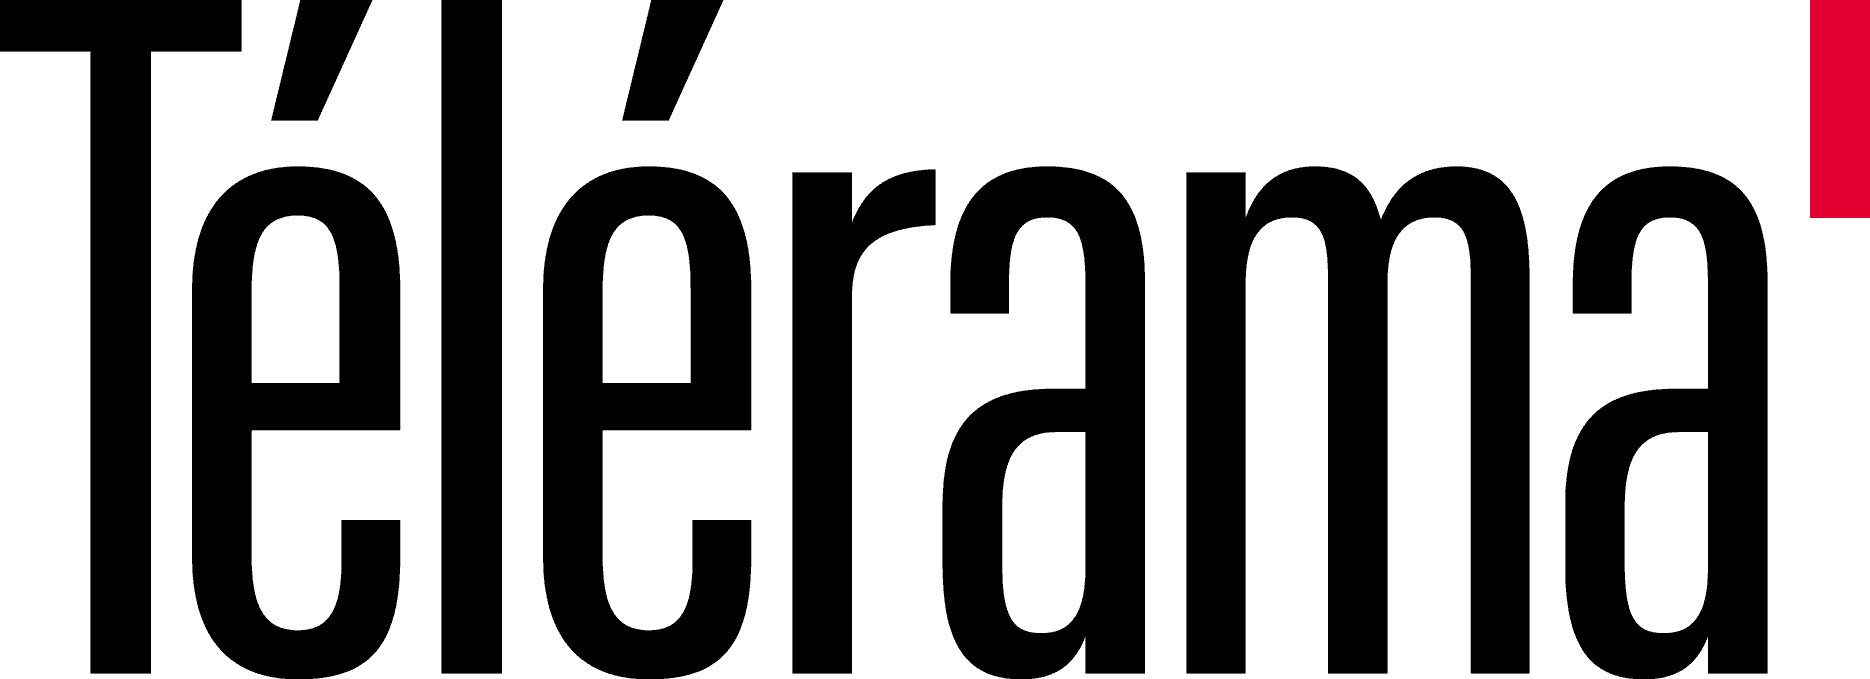 Télérama logo - Revue de presse matinale